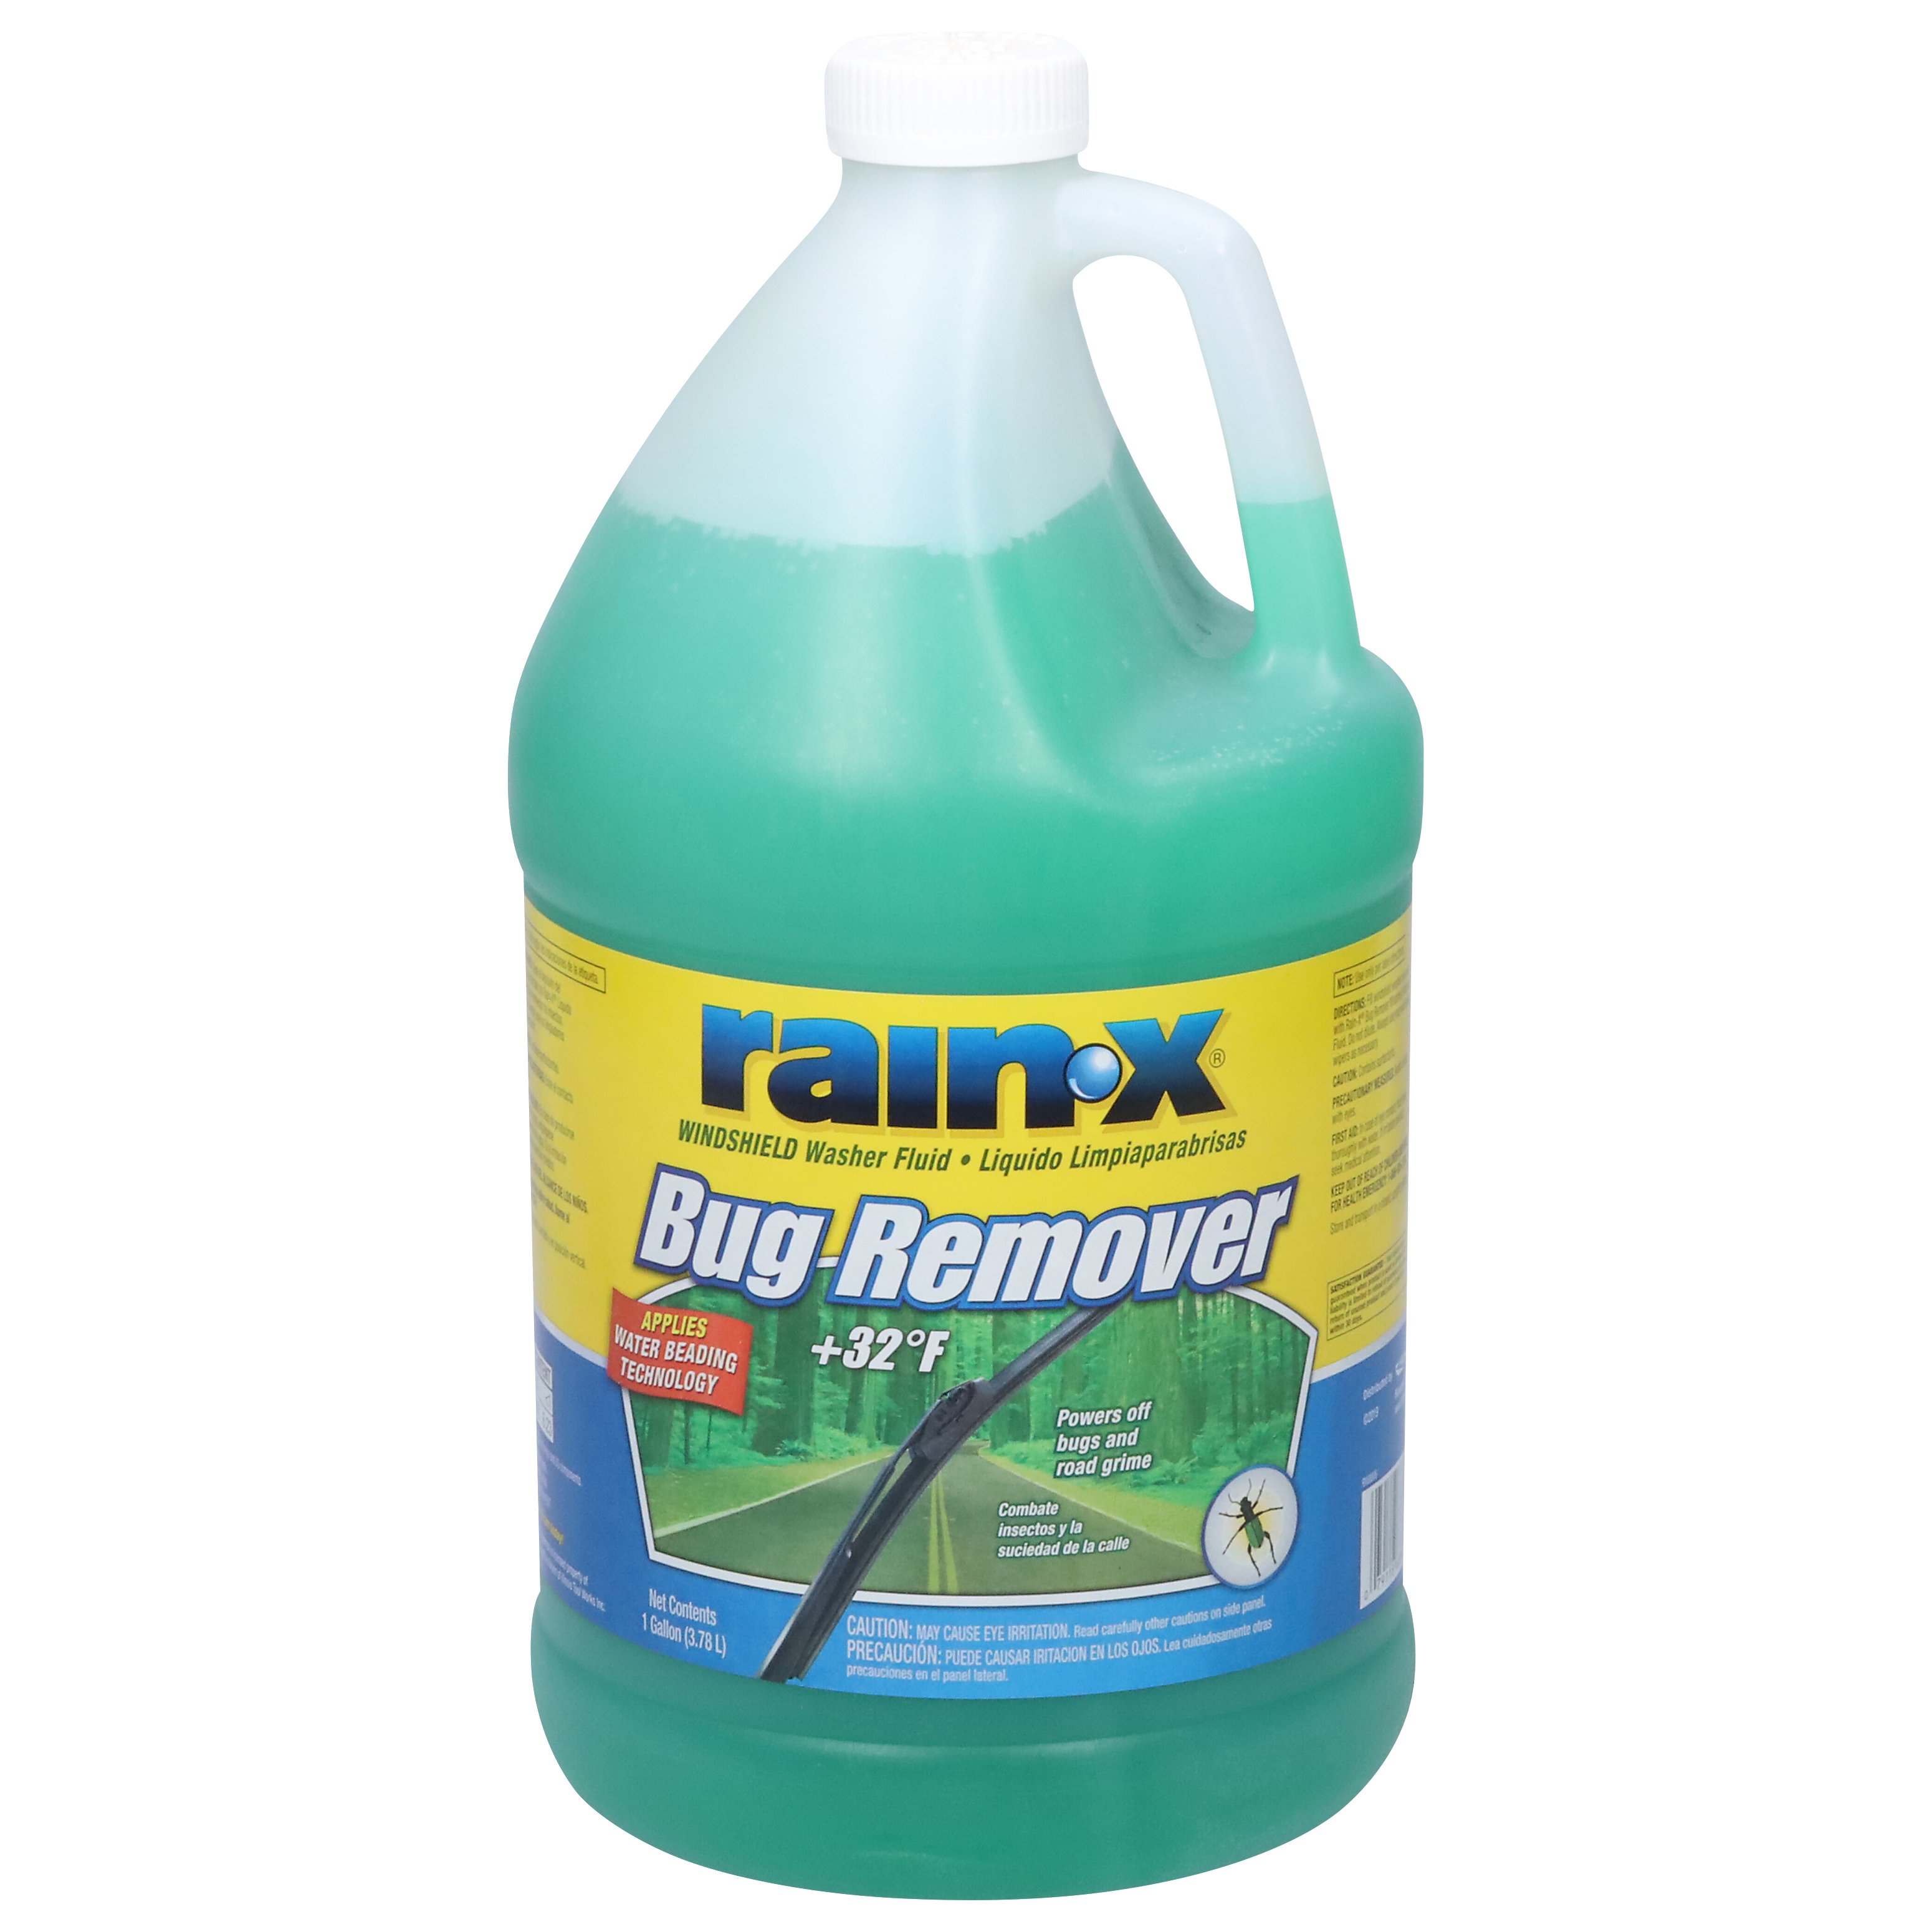 Rain-X Bug Remover Windshield Washer Fluid